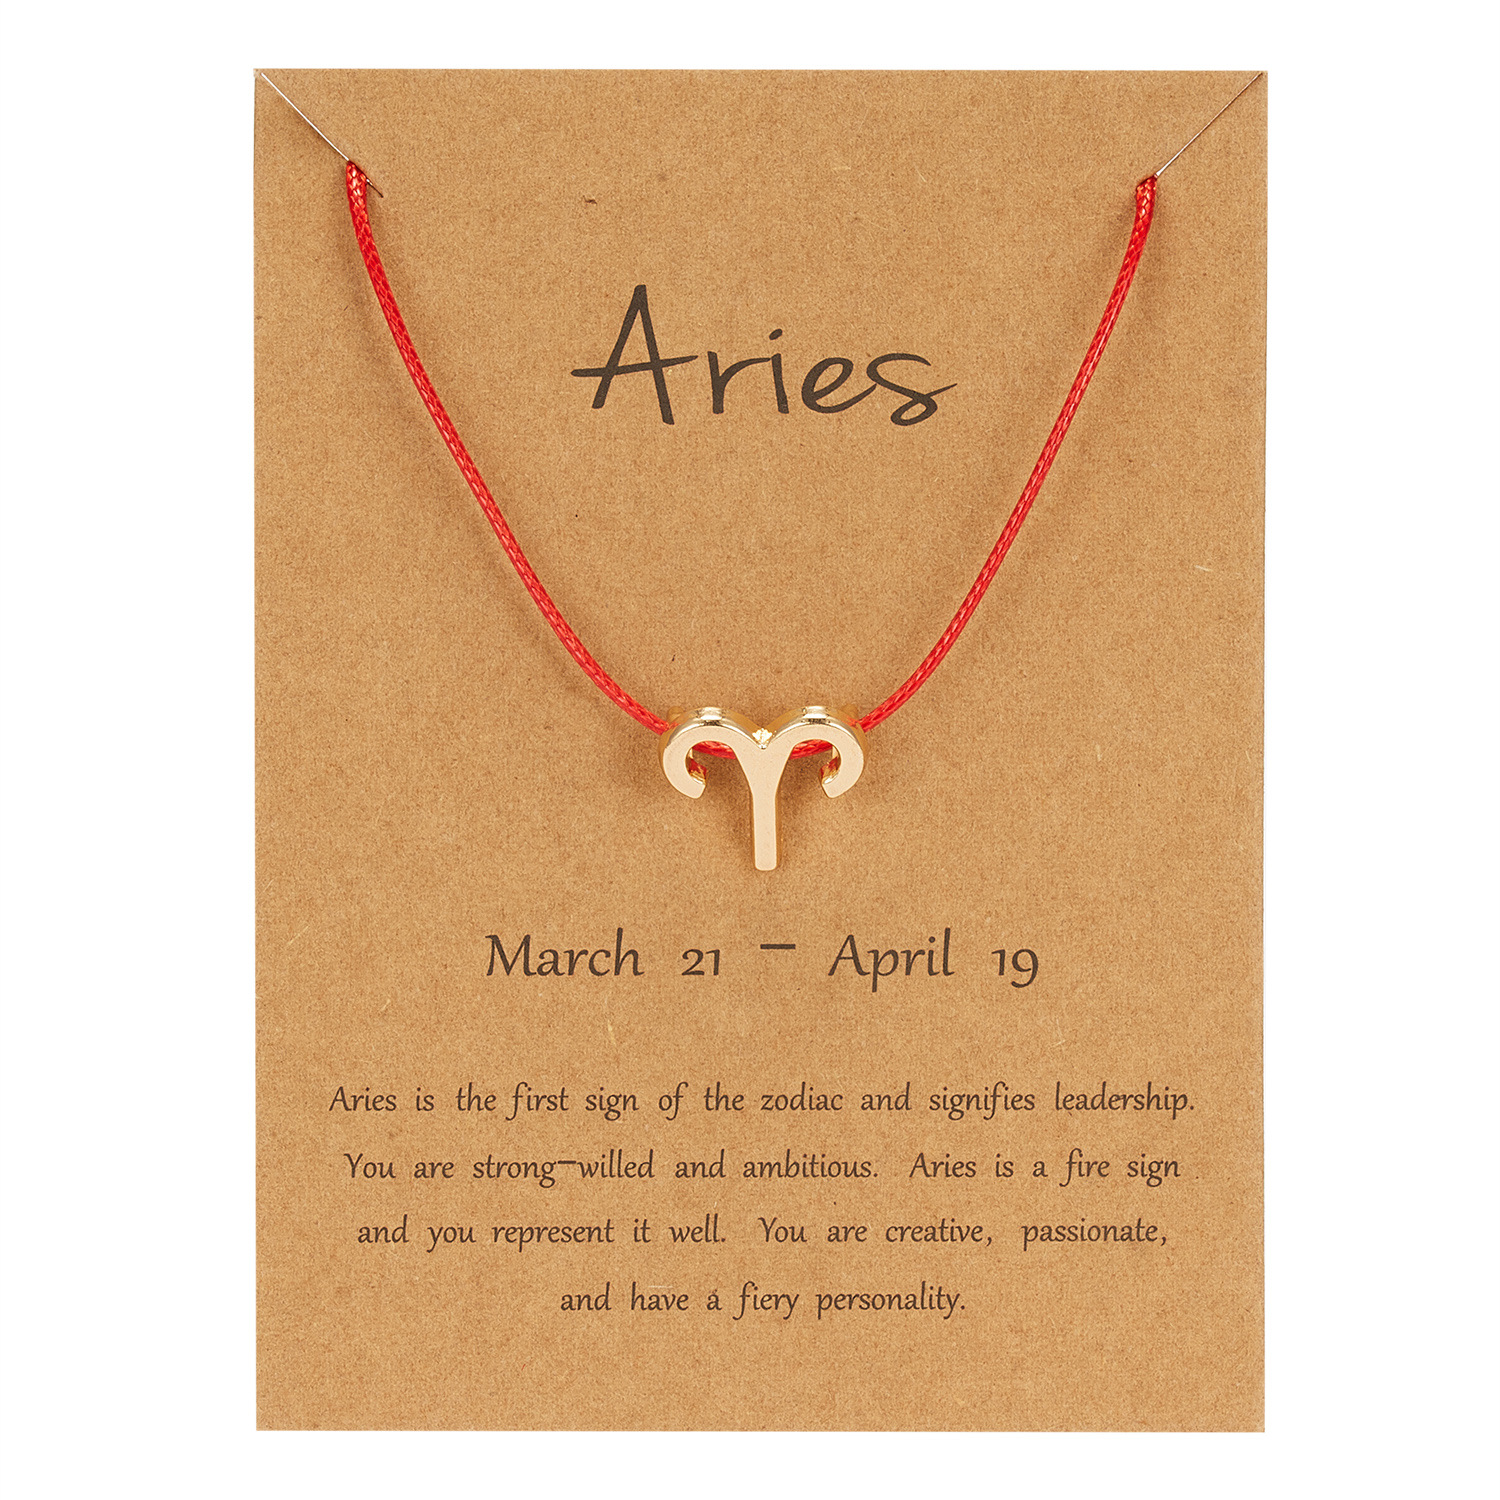 Aries(Red Rope)